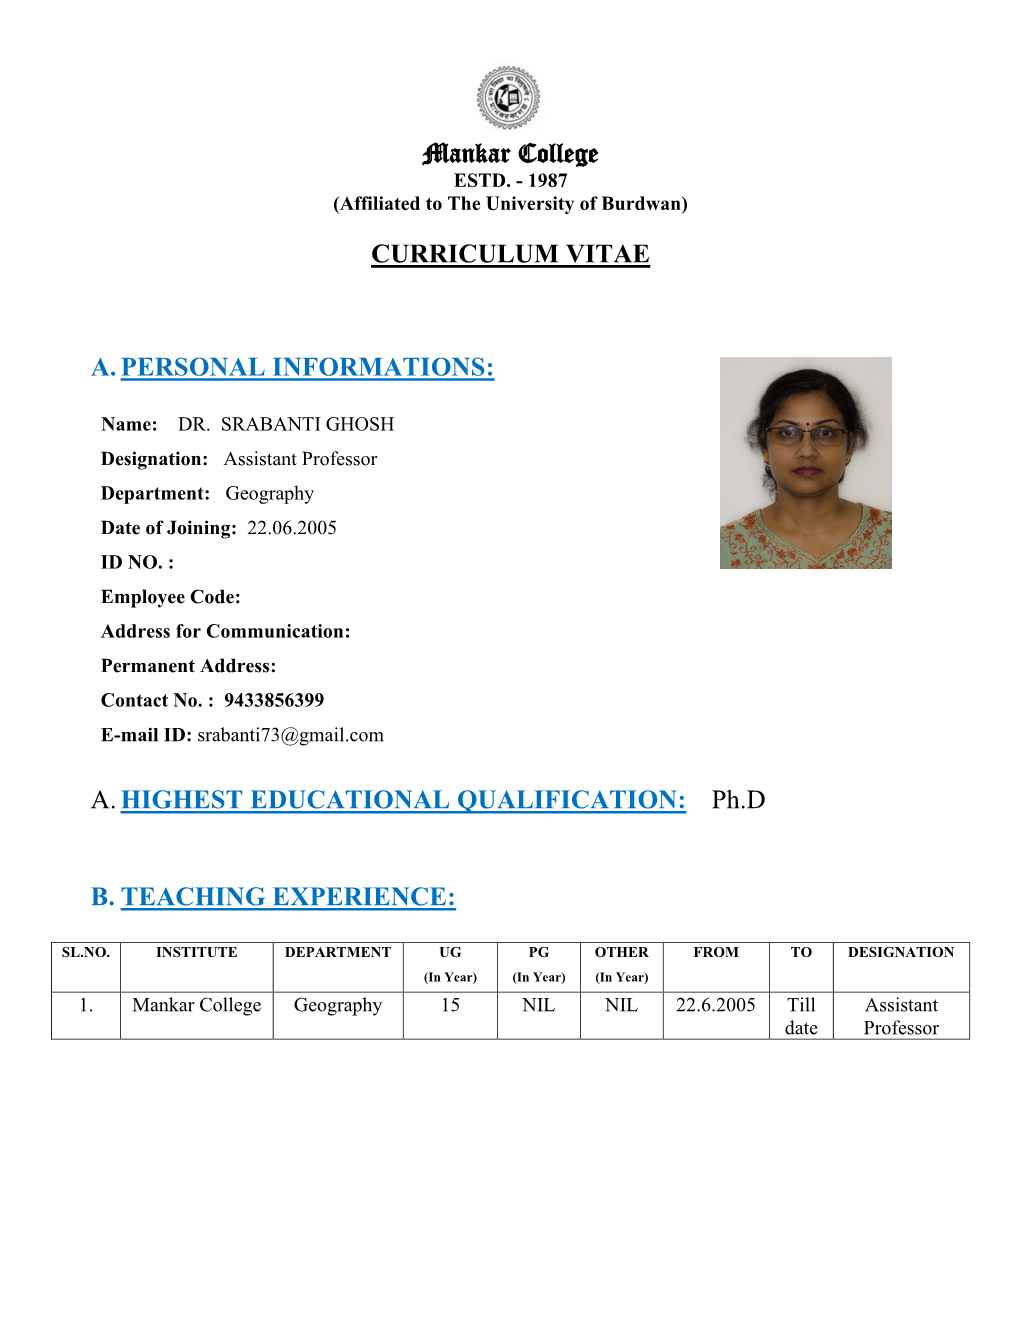 Mankar College CURRICULUM VITAE A. PERSONAL INFORMATIONS: A. HIGHEST EDUCATIONAL QUALIFICATION: Ph.D B. TEACHING EXPERIENCE